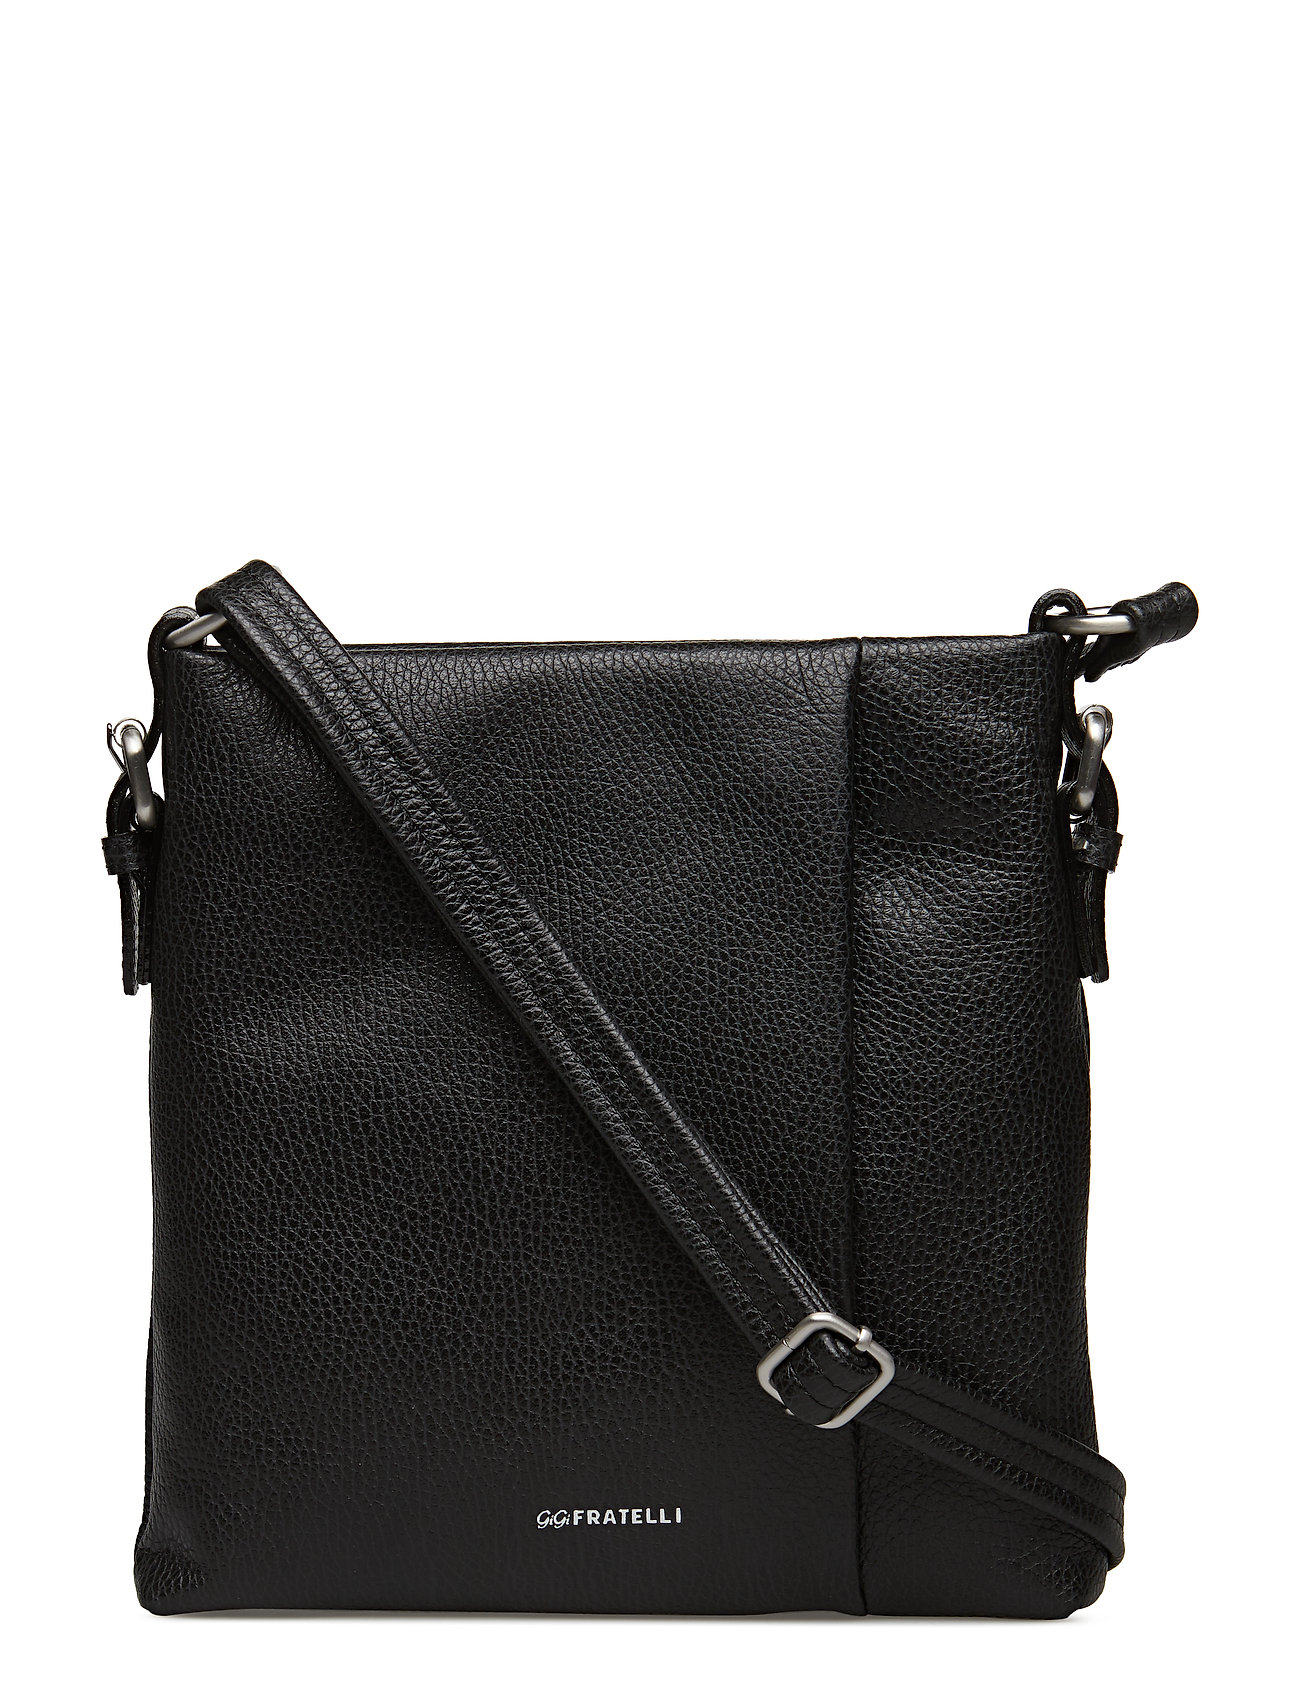 Romance Shoulderbag / Crossbody Bag (Black) (£105) - GiGi Fratelli ...